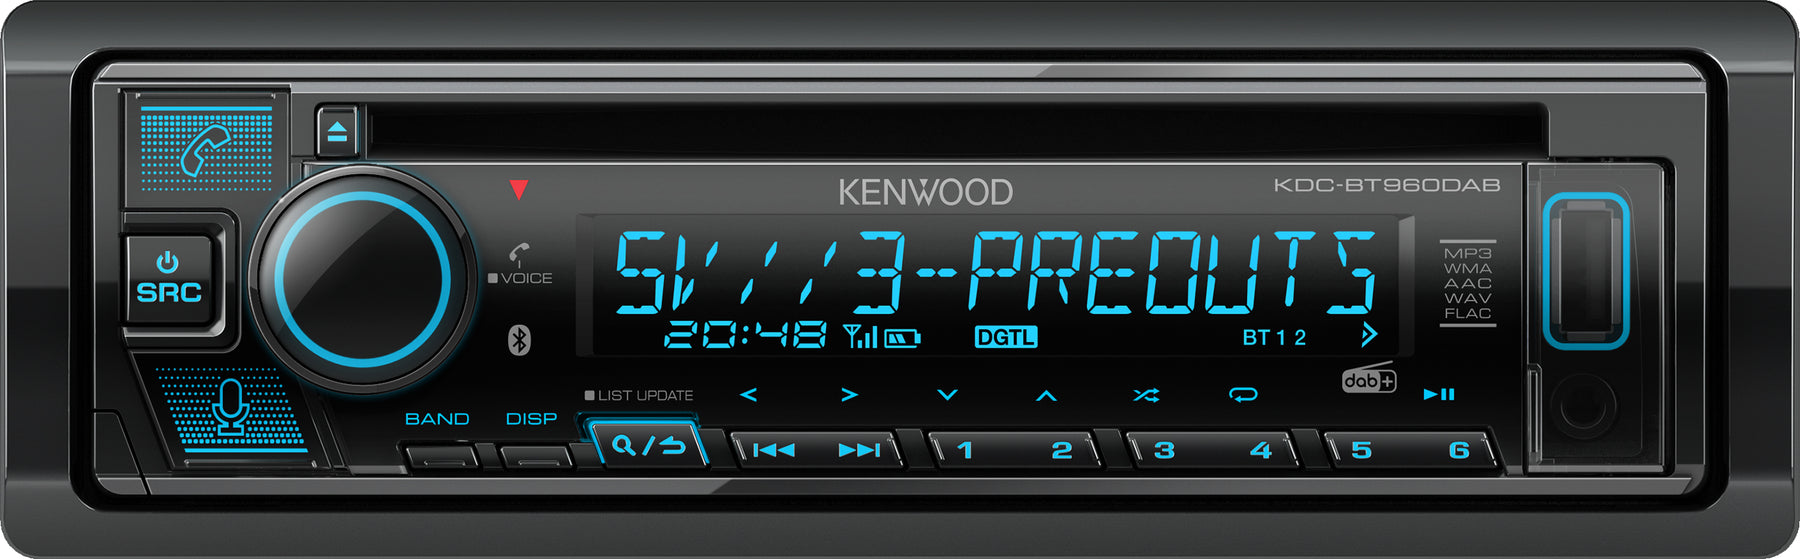 Kenwood KDC-BT960DAB. Sintolettore CD con Digital radio DAB+, Bluetooth technology e assistente vocale Amazon Alexa .